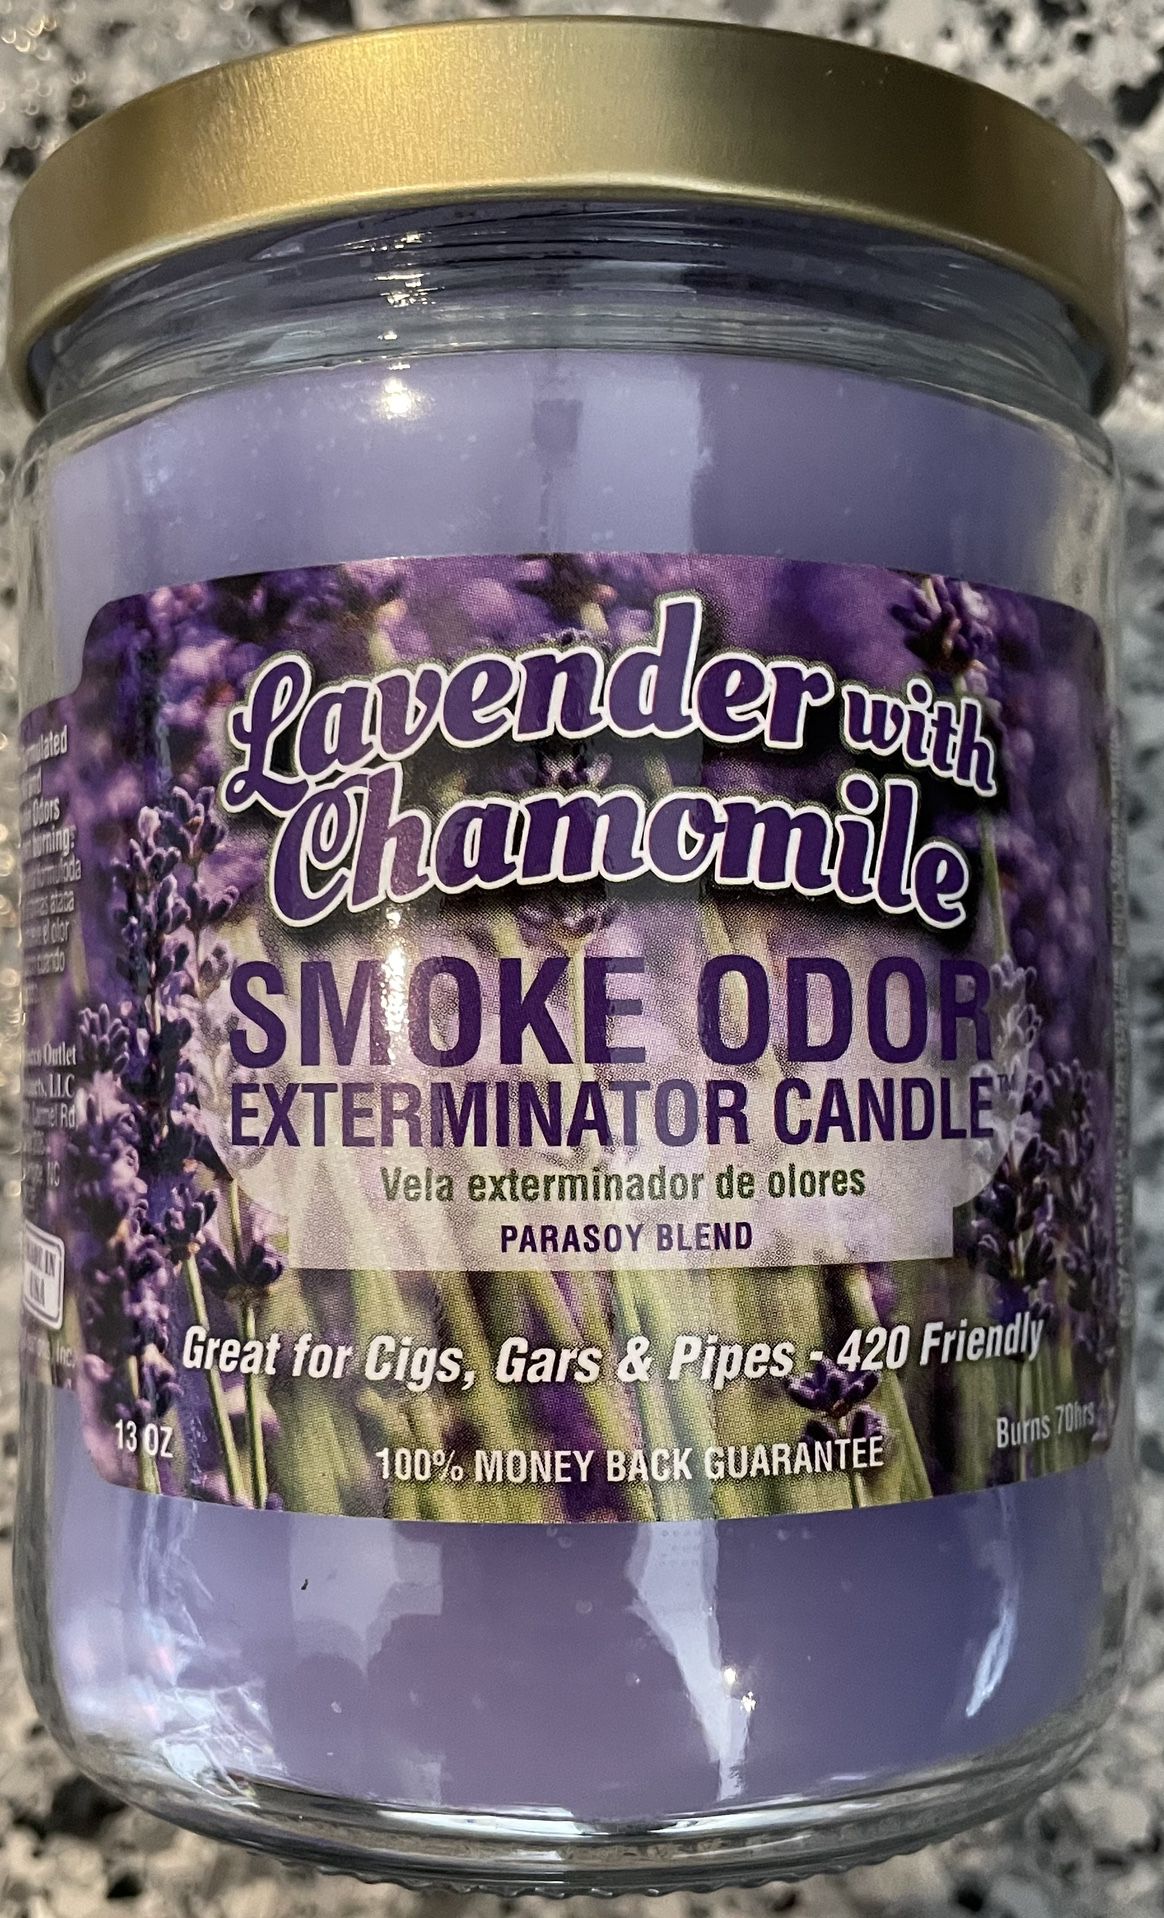 Smoke Odor Exterminator Candle, Lavender With Chamomile, 13oz